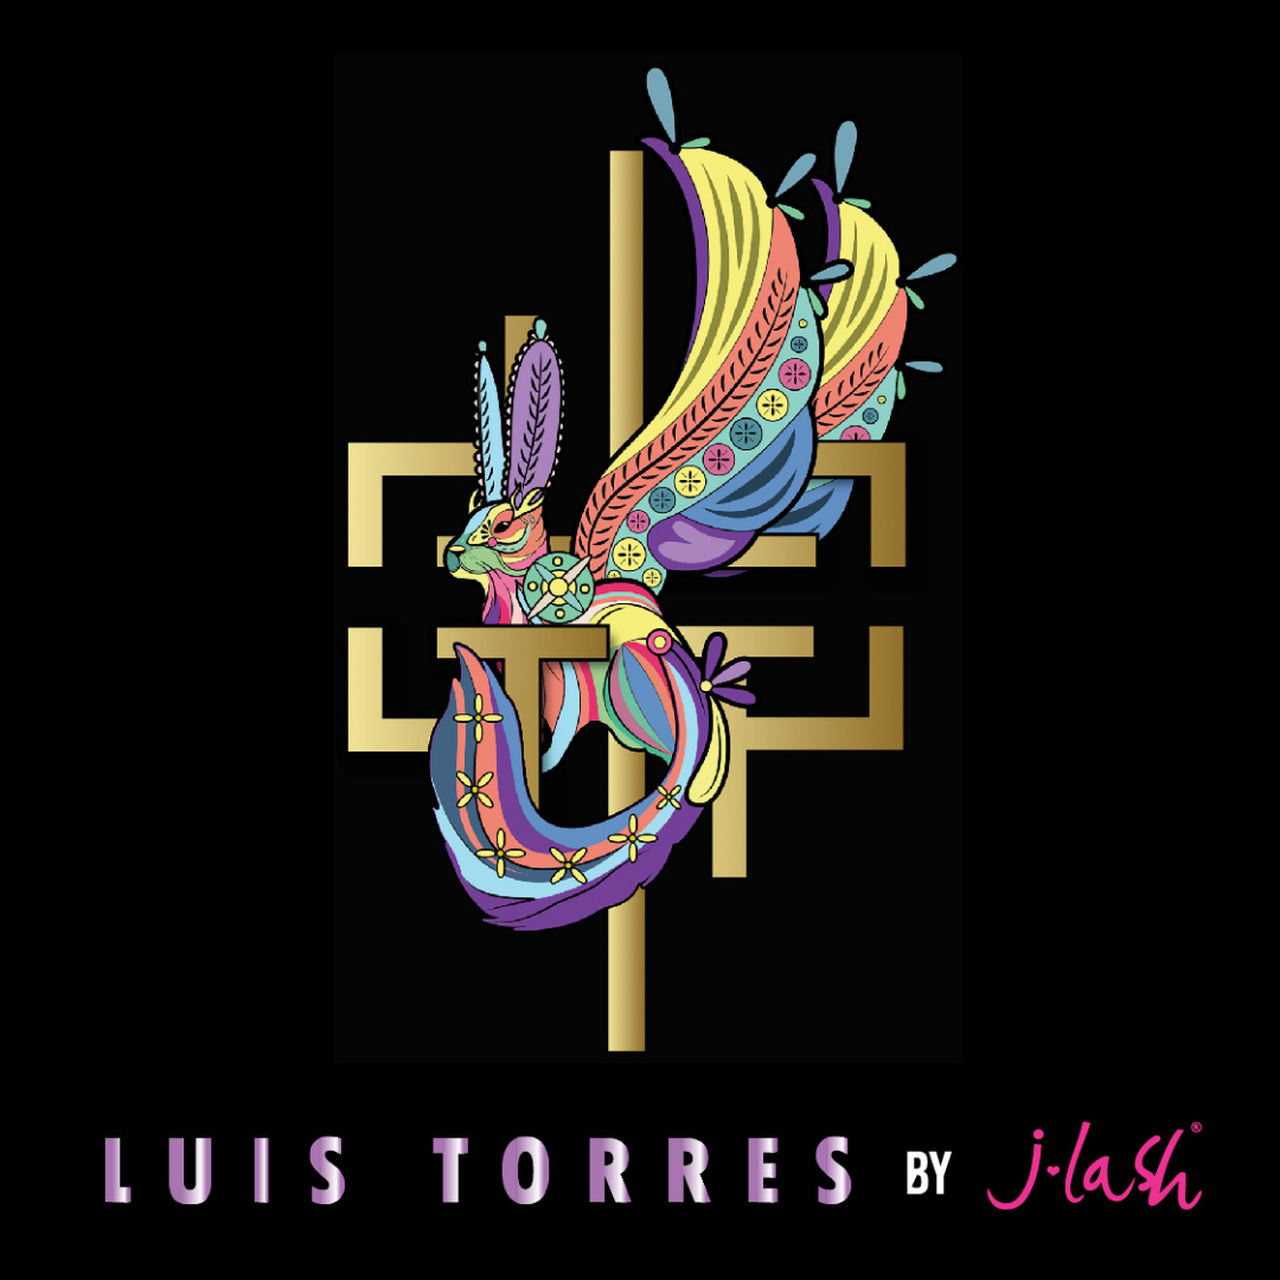 J.Lash - Luis Torres Beauty Is In the Details 6 pairs